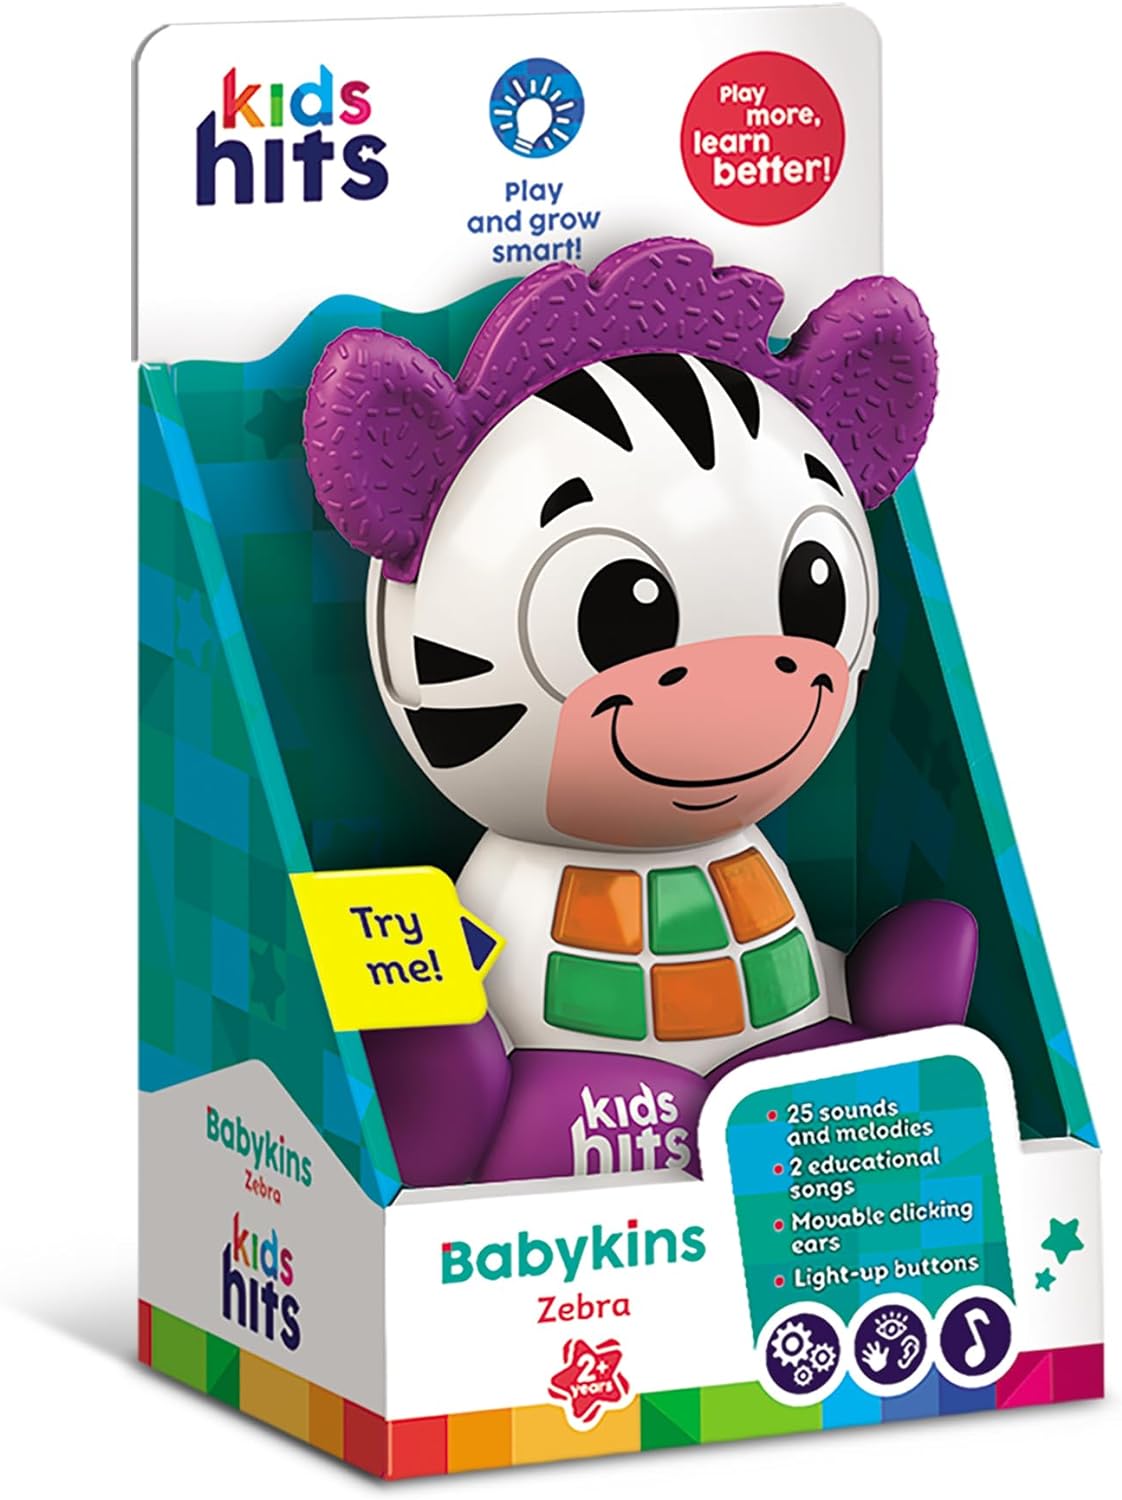 Kids Hits Babykins Zebra العب أكثر وتعلم بشكل أفضل!